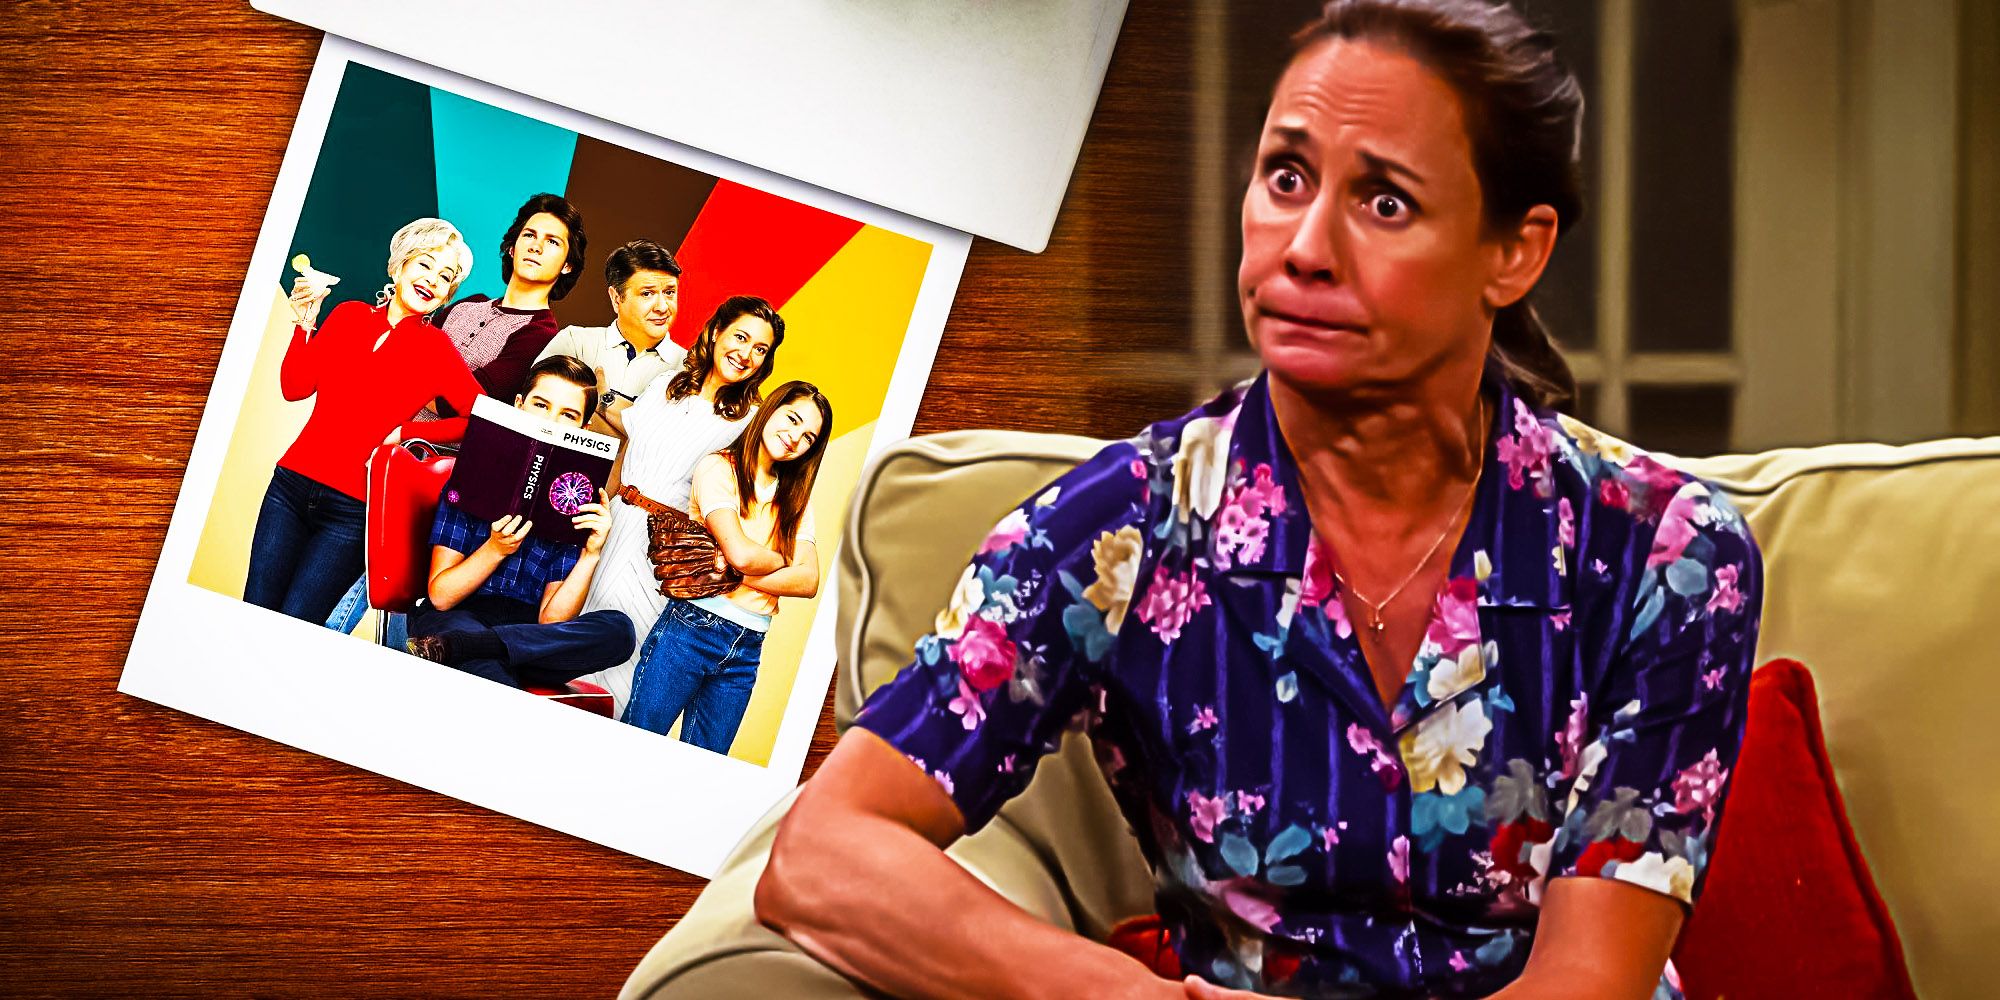 visdom Polering Invitere Young Sheldon Season 6 Explains Why Big Bang Theory Mary Is So Bitter